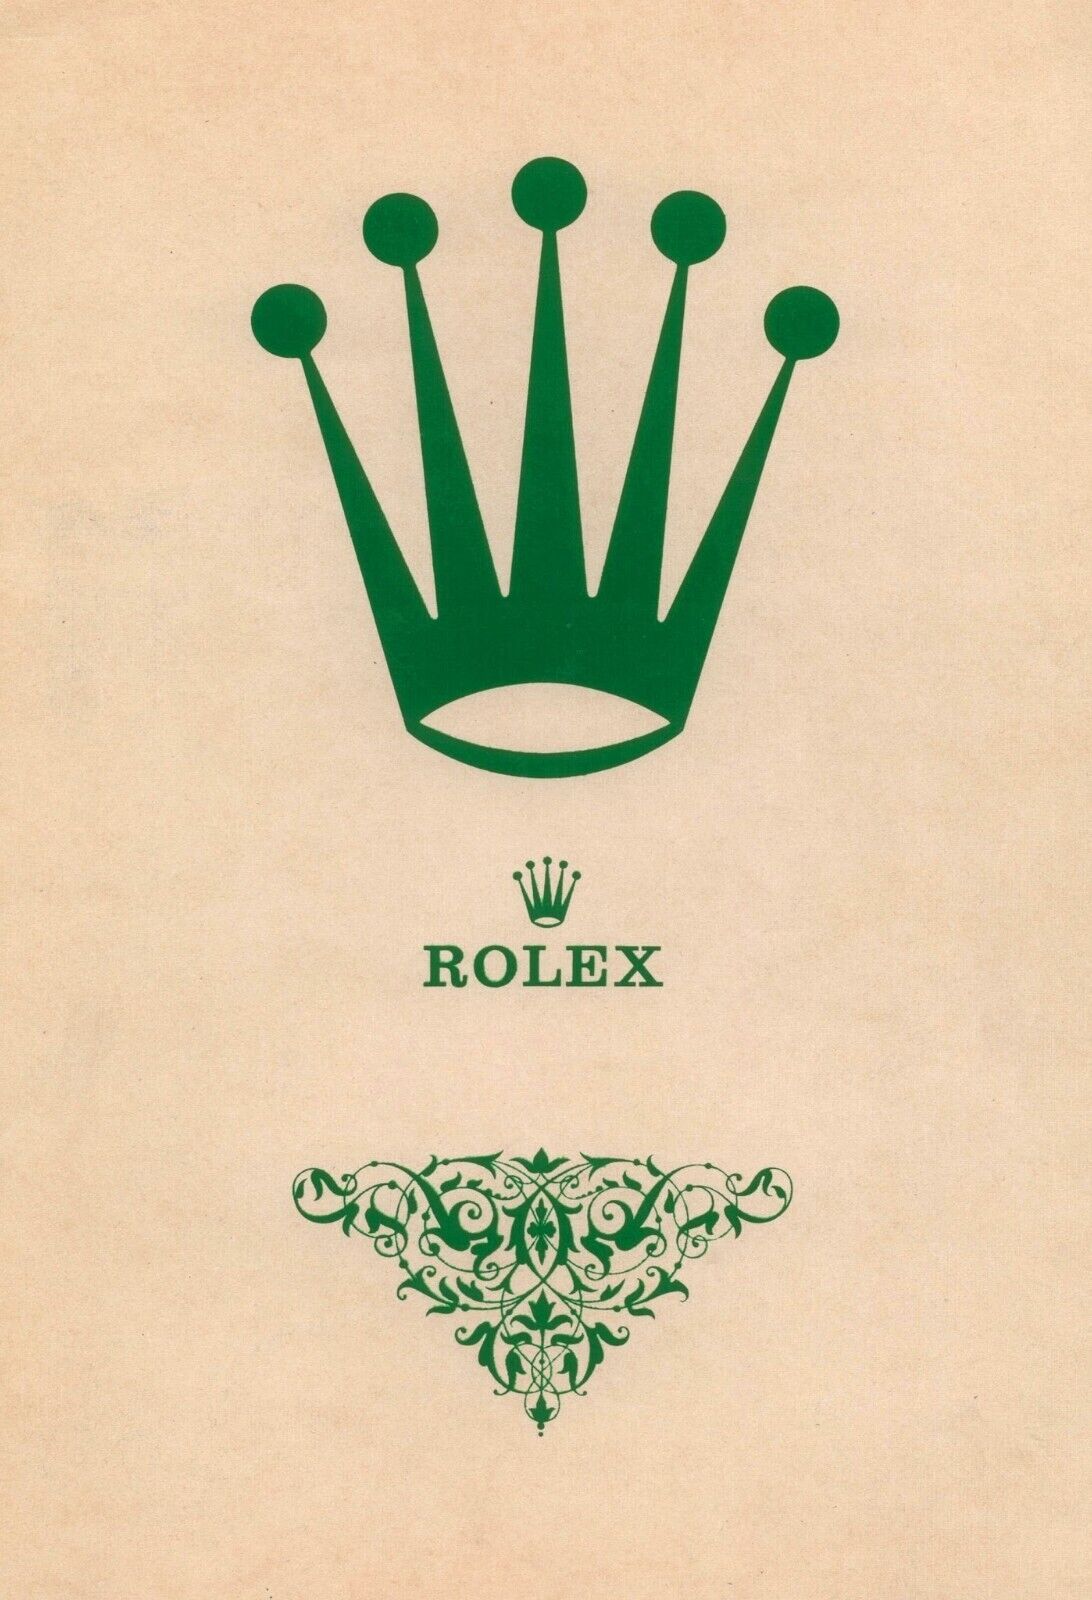 Rolex Submariner Watch REPRINT vintage classic ad 11x16 Poster Luxury logo art